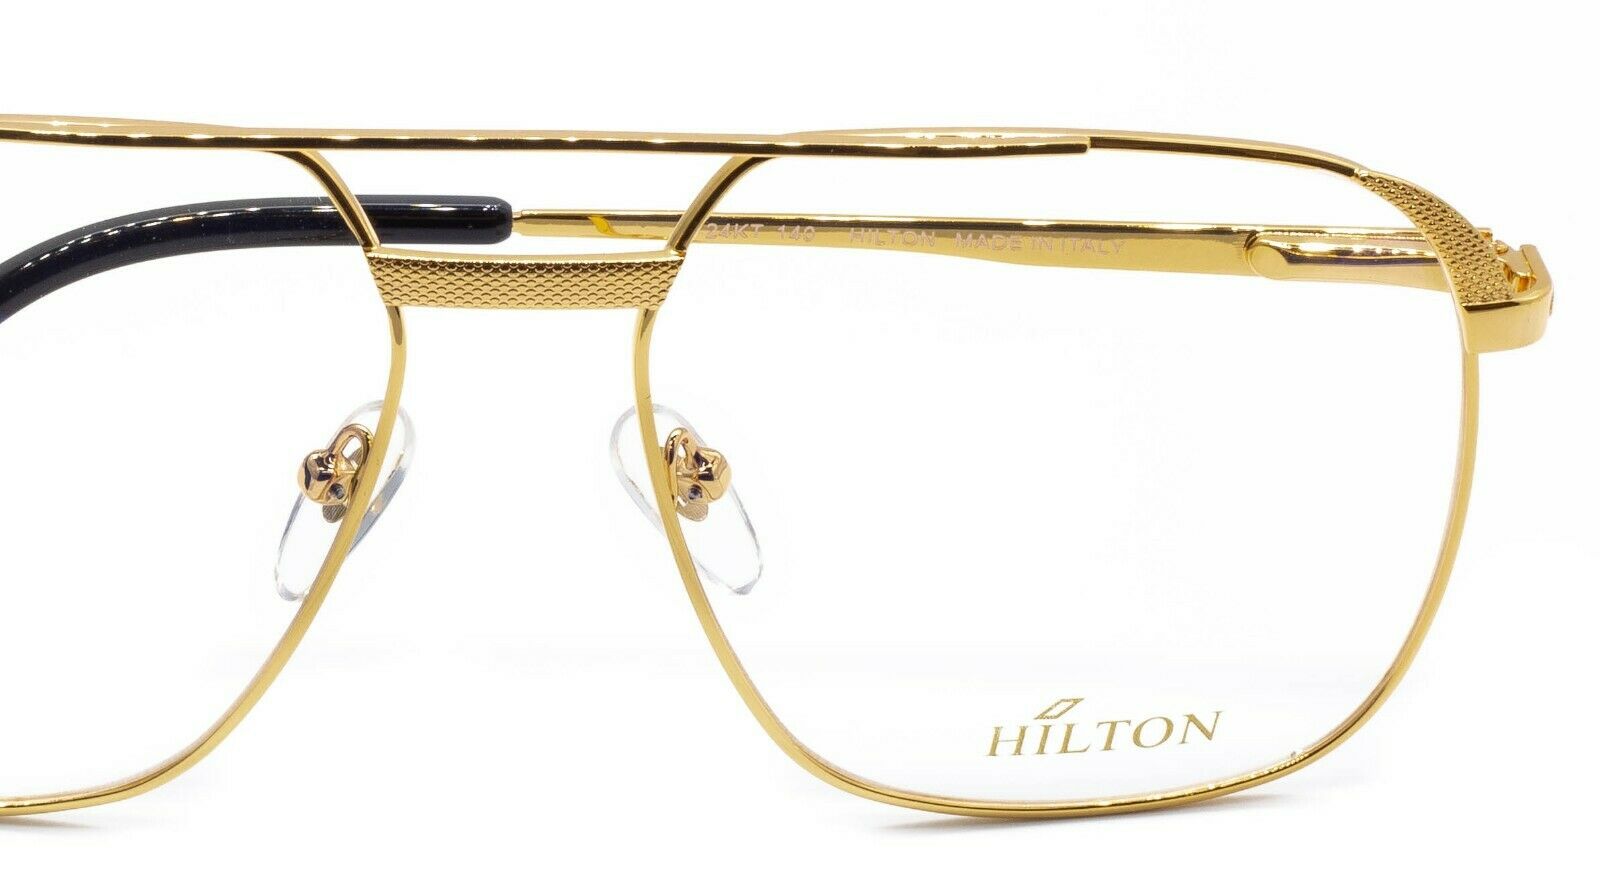 Hilton Eyewear Vintage Class 010 995 24KT 60x18mm FRAMES RX Optical - New NOS